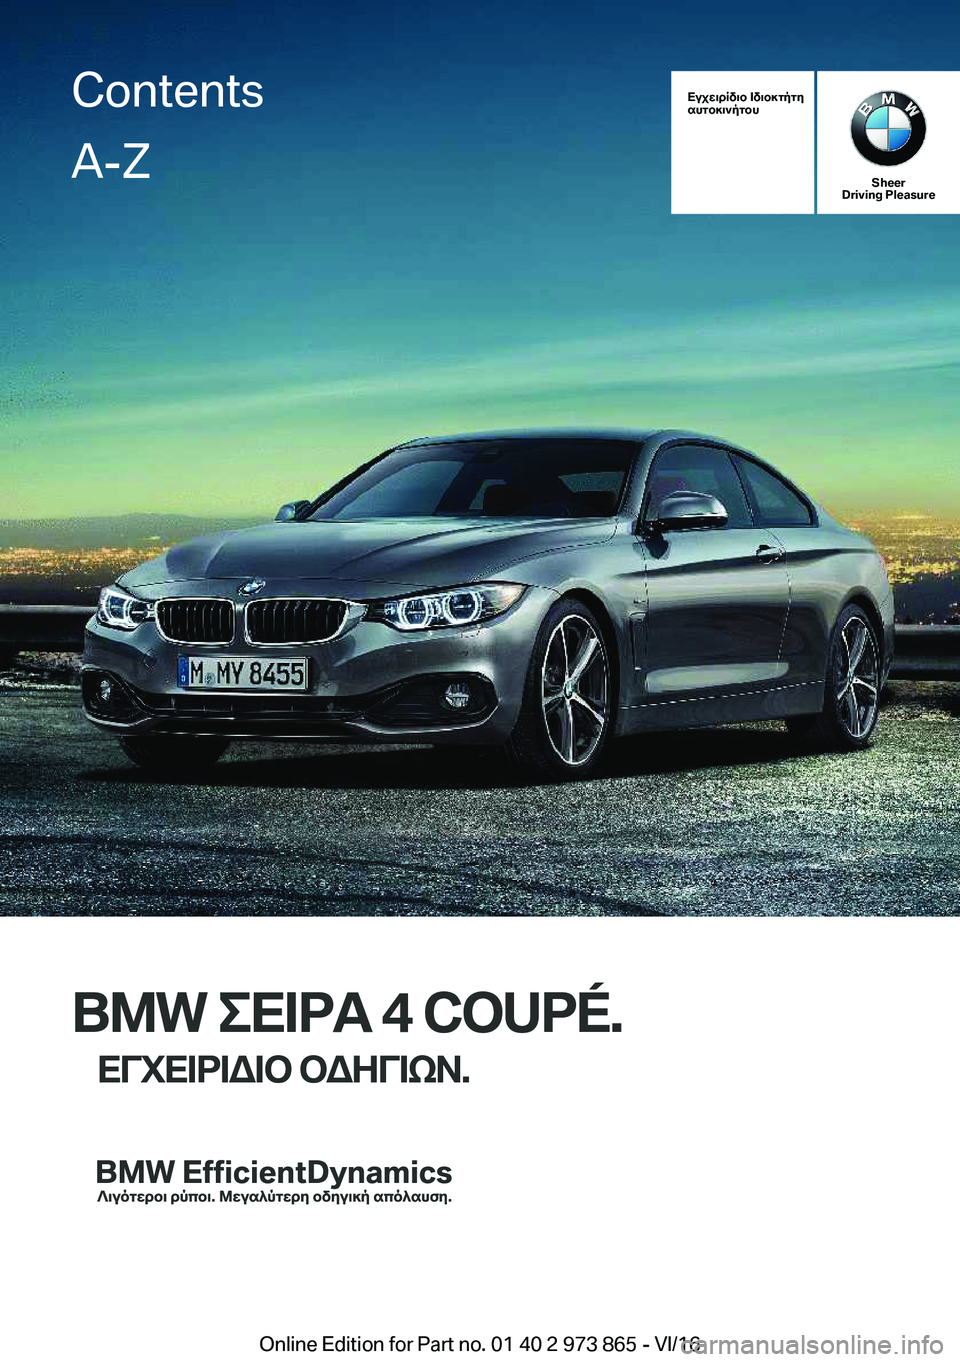 BMW 4 SERIES COUPE 2017  ΟΔΗΓΌΣ ΧΡΉΣΗΣ (in Greek) Xujw\dRv\b�=v\b]gpgy
shgb]\`pgbh
�S�h�e�e�r
�D�r�i�v�i�n�g��P�l�e�a�s�u�r�e
�B�M�W�eX=dT��4��C�O�U�P�